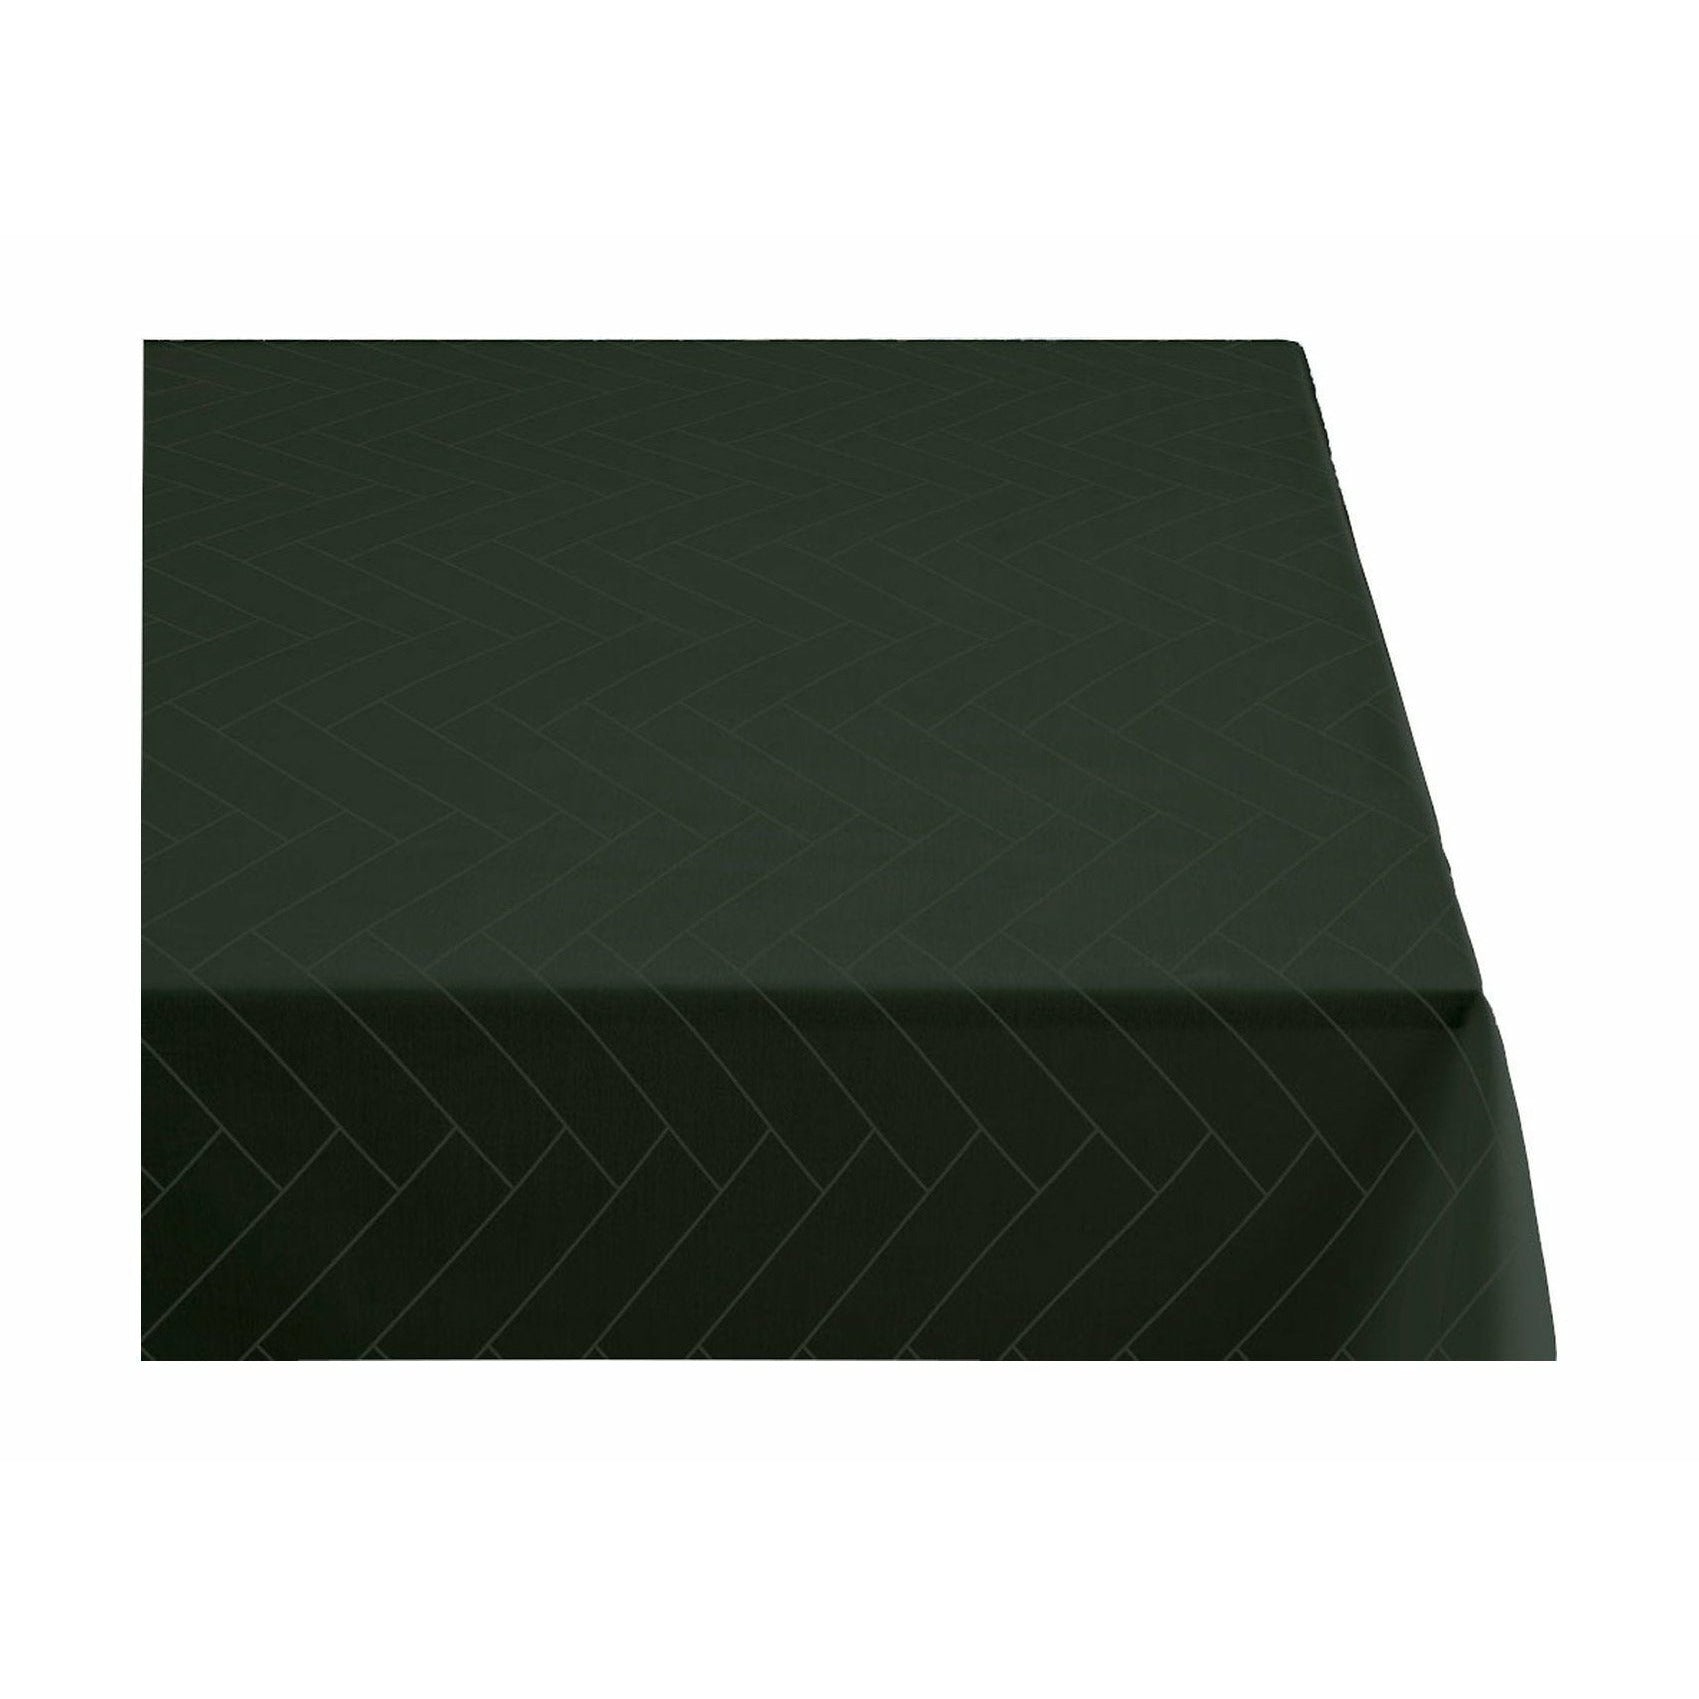 Södahl Dagg 140x370 brickor damask bordduk, skoggrön